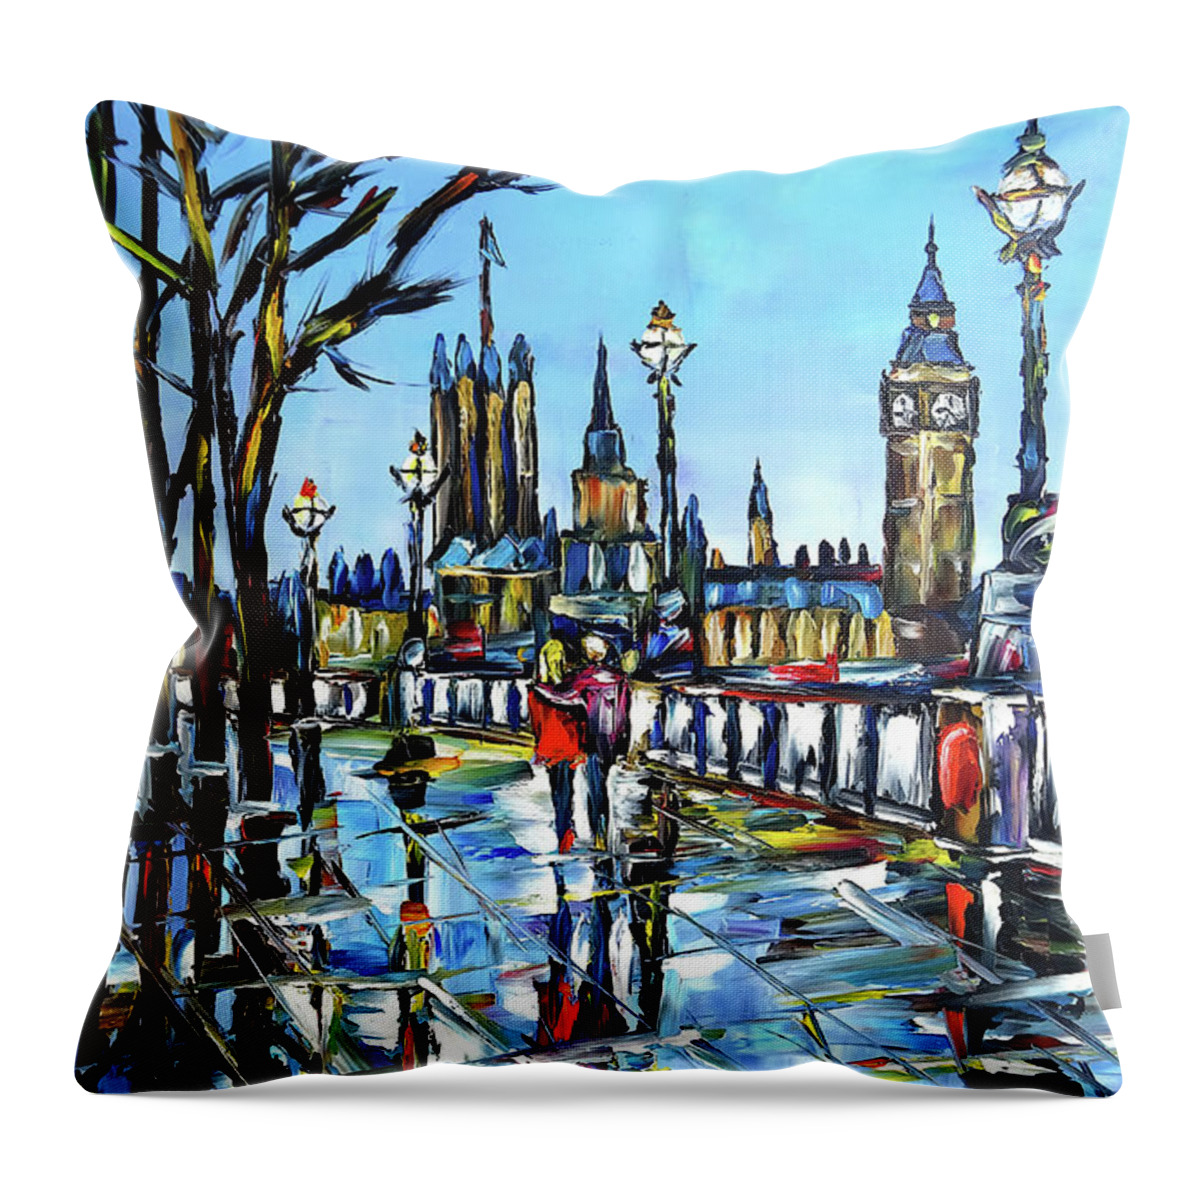 London In Autumn Throw Pillow featuring the painting Rainy Autumn Day In London by Mirek Kuzniar